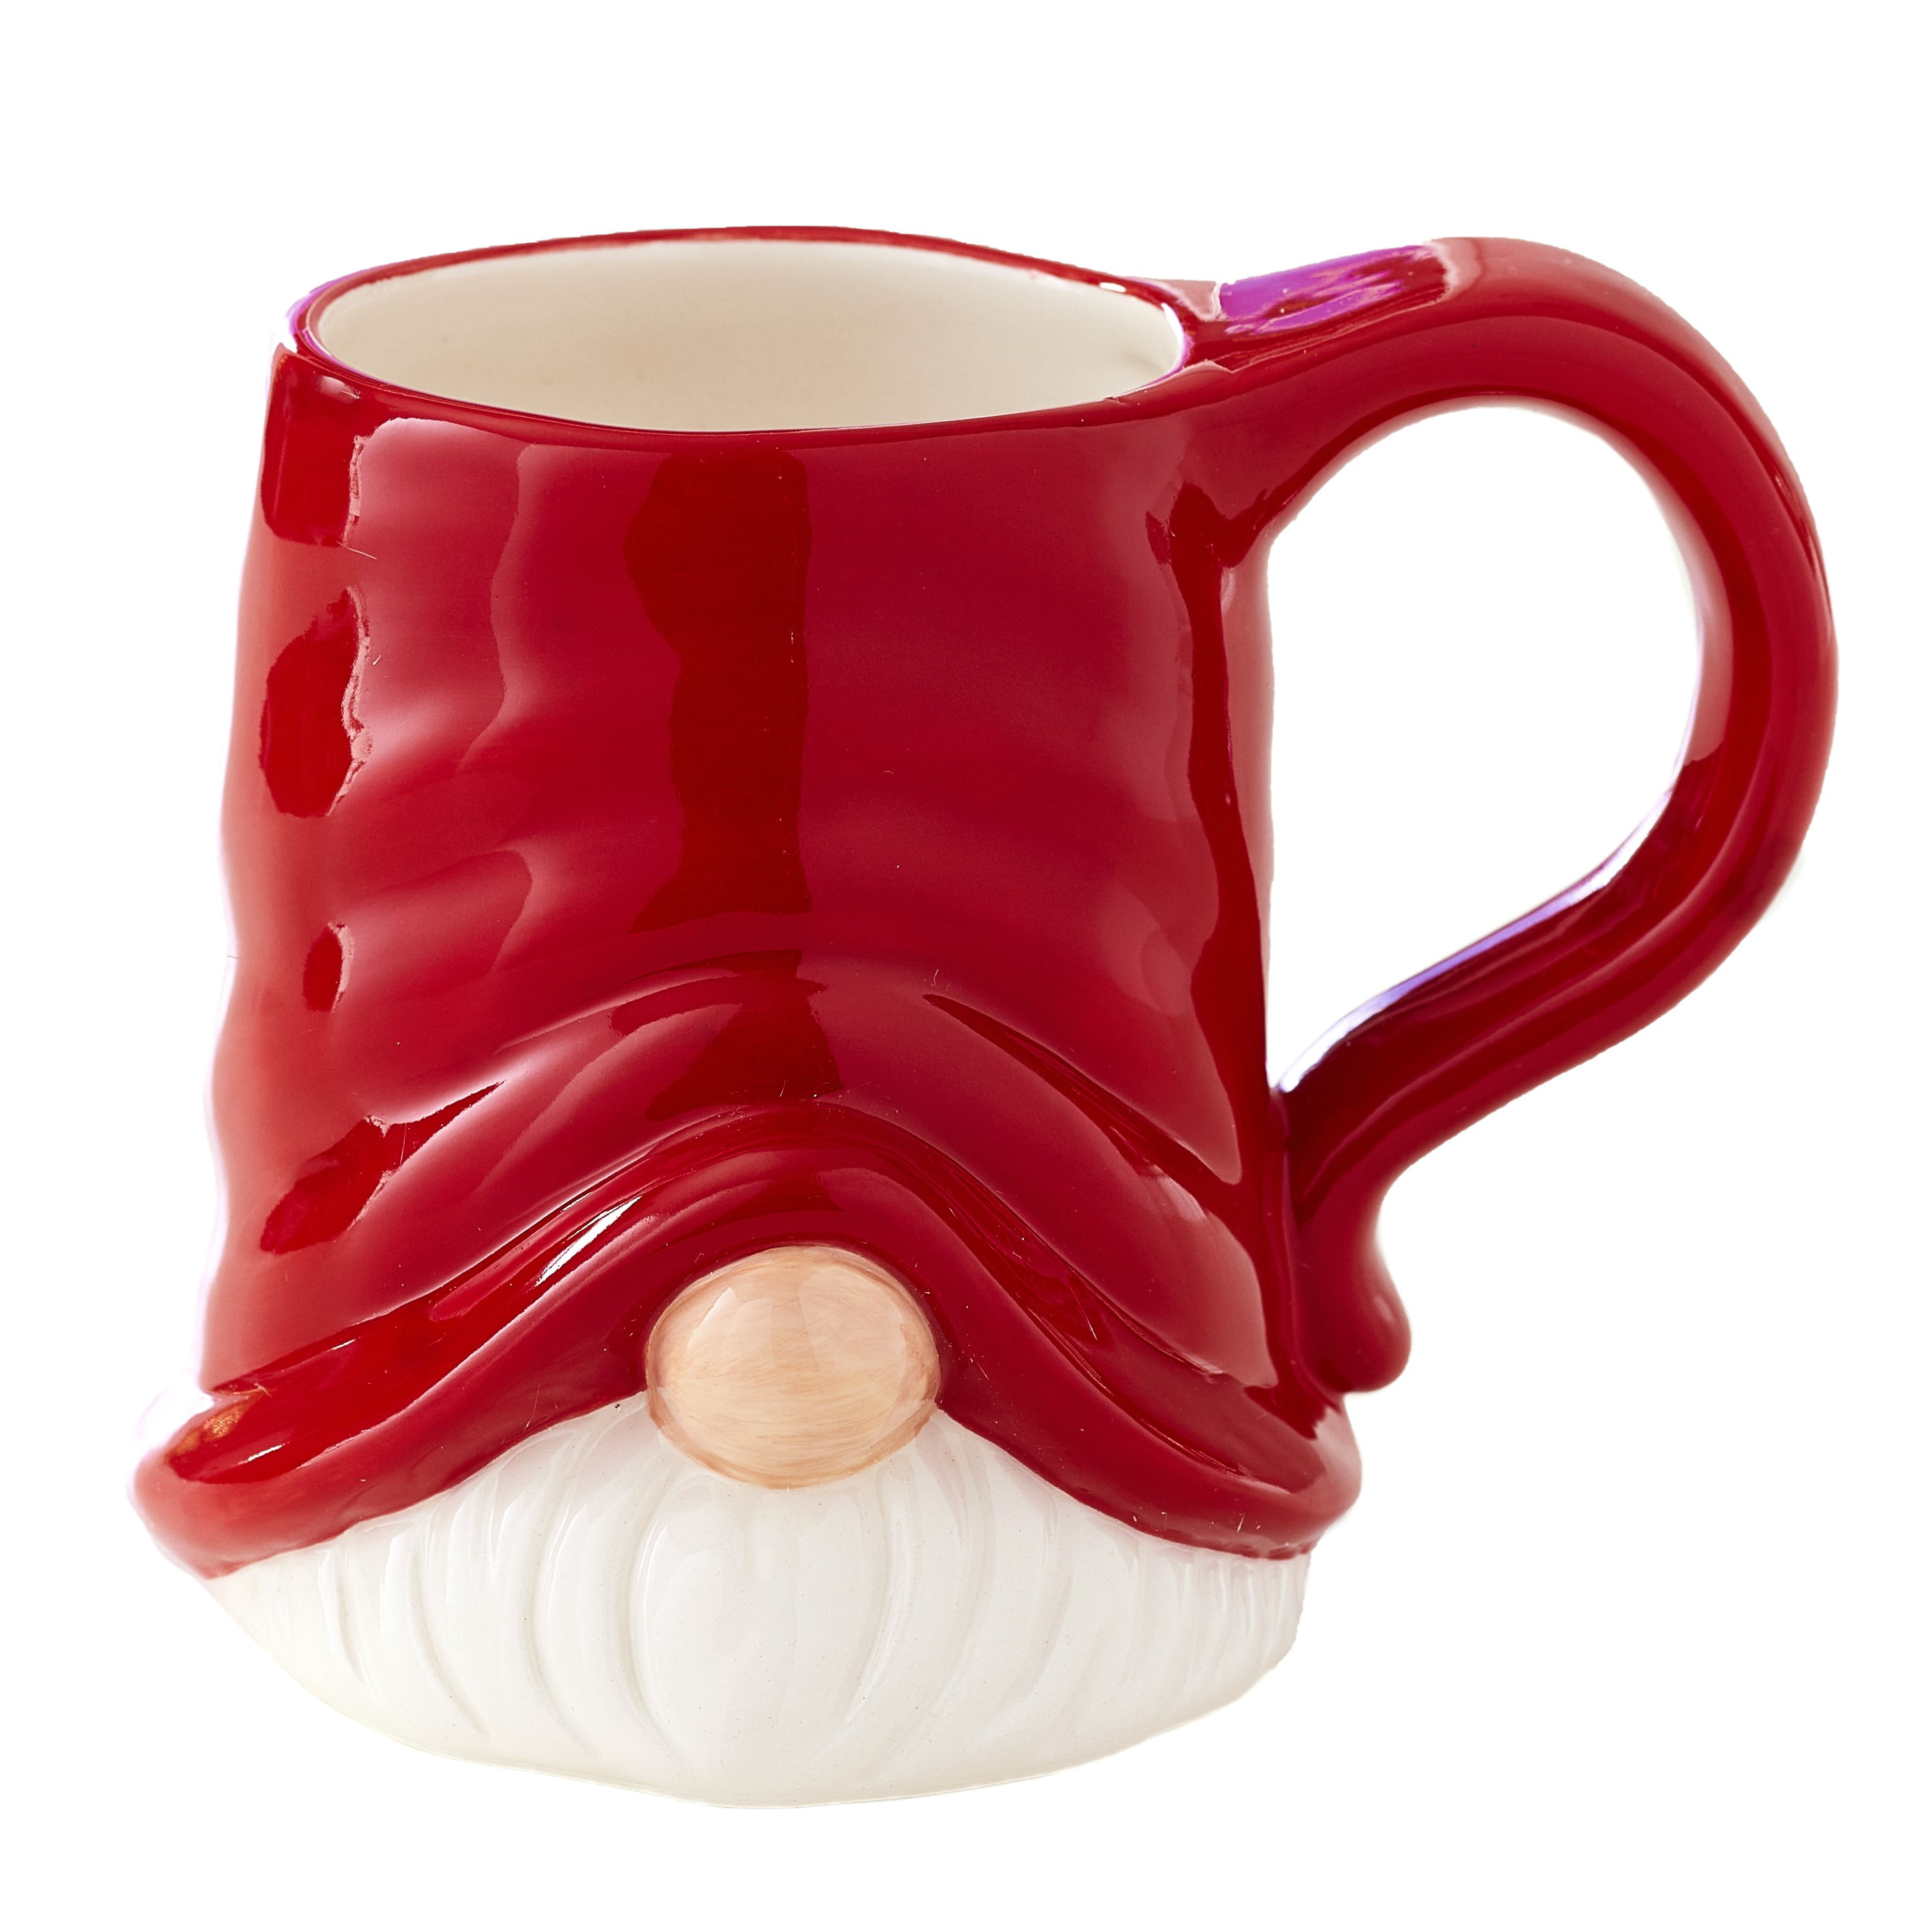 NOVELTY 3D GARDEN GNOME DESIGN HANDLE COFFEE MUG TEA CUP NEW IN GIFT BOX 